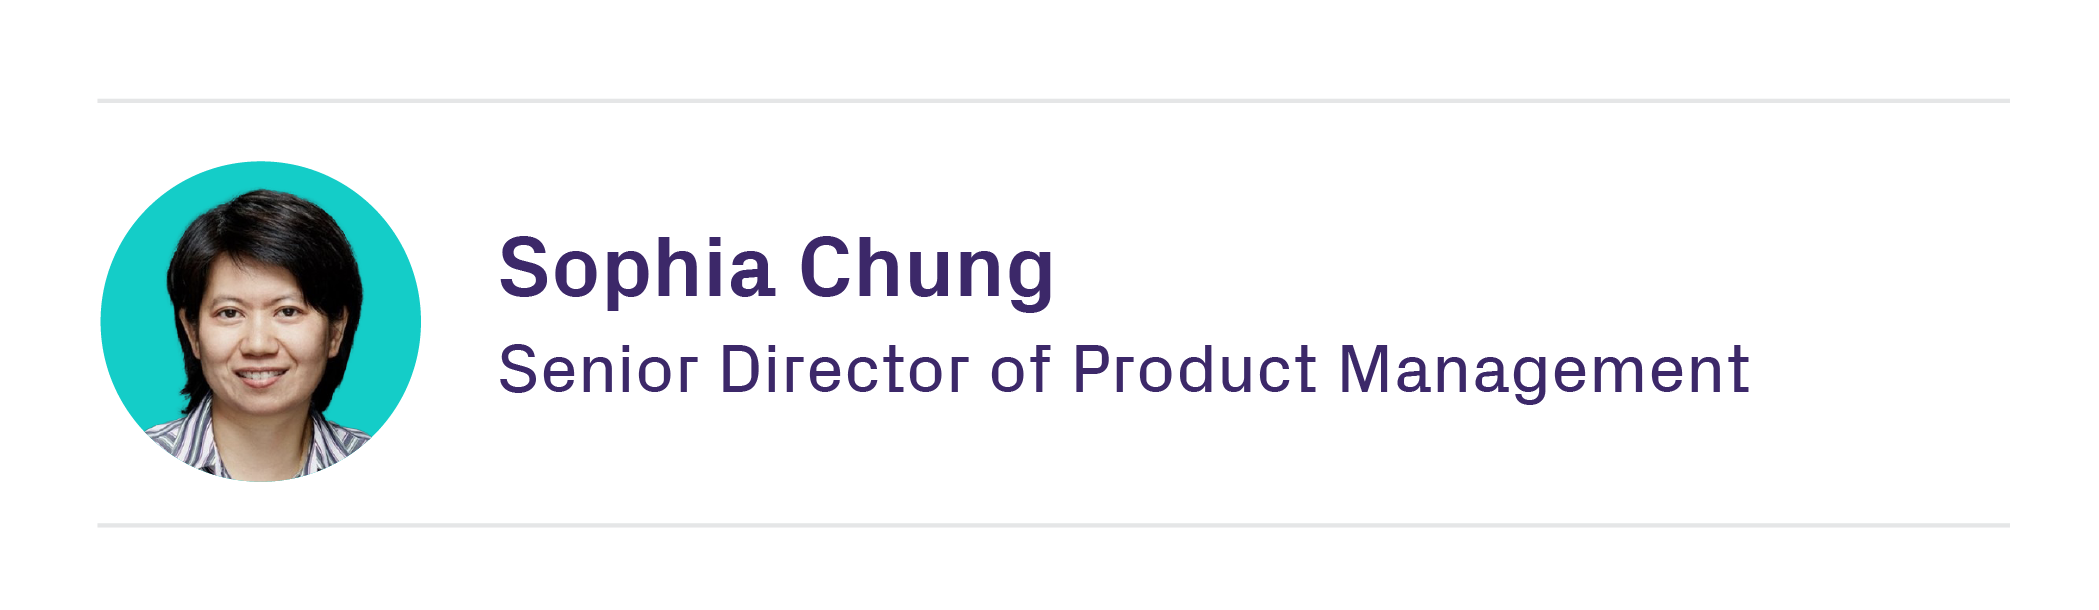 2021 mobile marketing predictions Vungle Sophia Chung